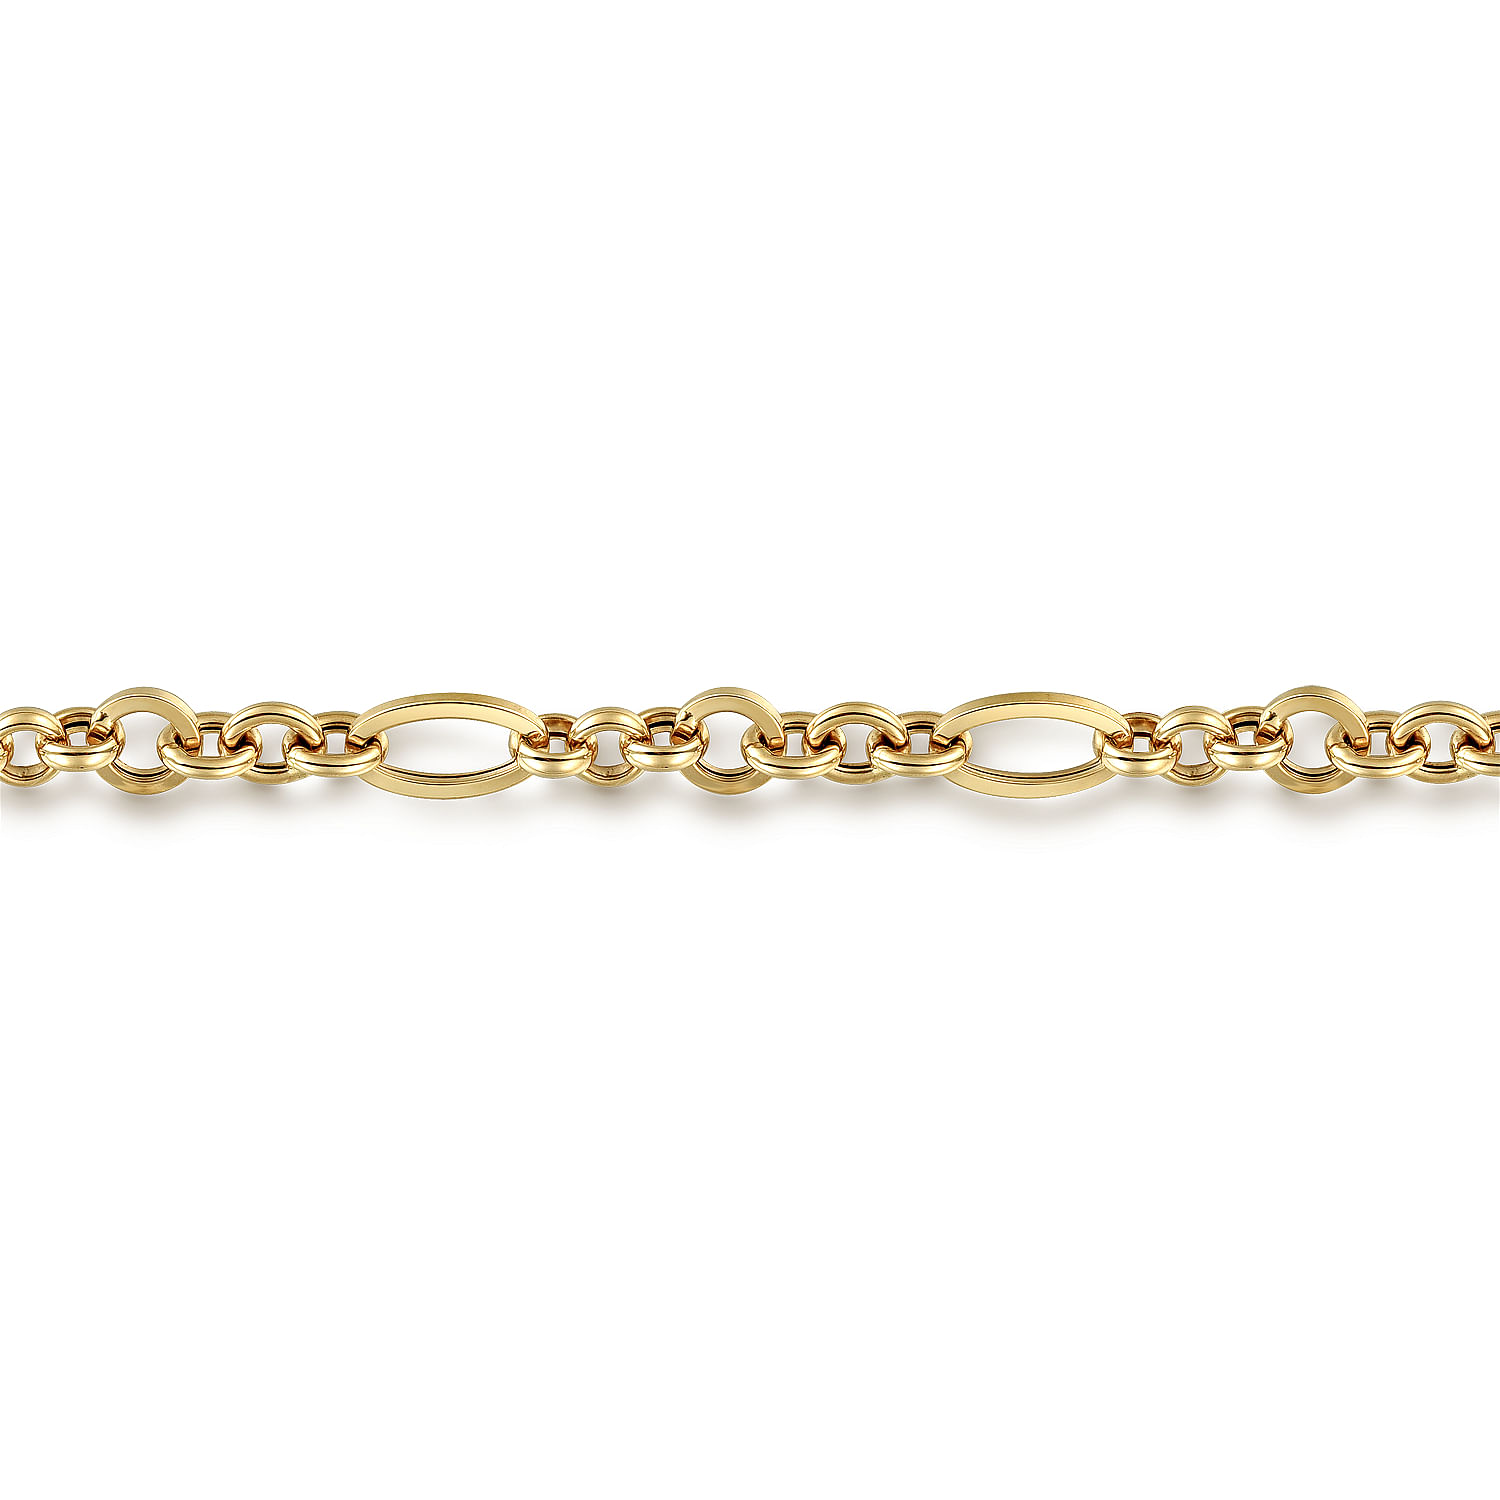 7 inch 14K Yellow Gold Hollow Figaro Link Chain Bracelet - Shot 2